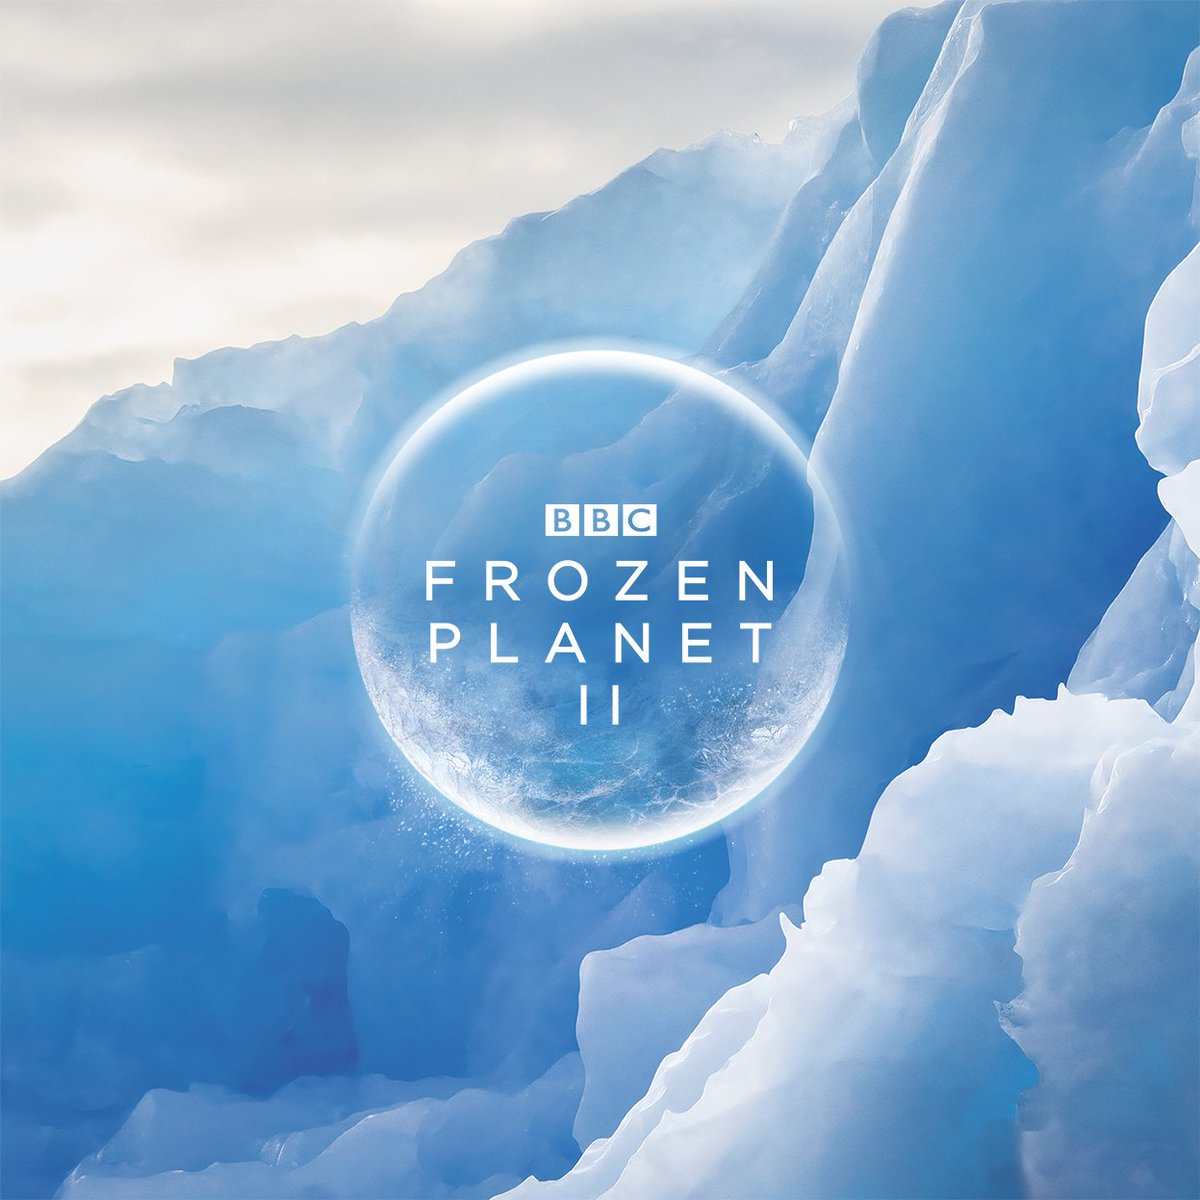  Frozen Planet II سیاره یخ زده 2